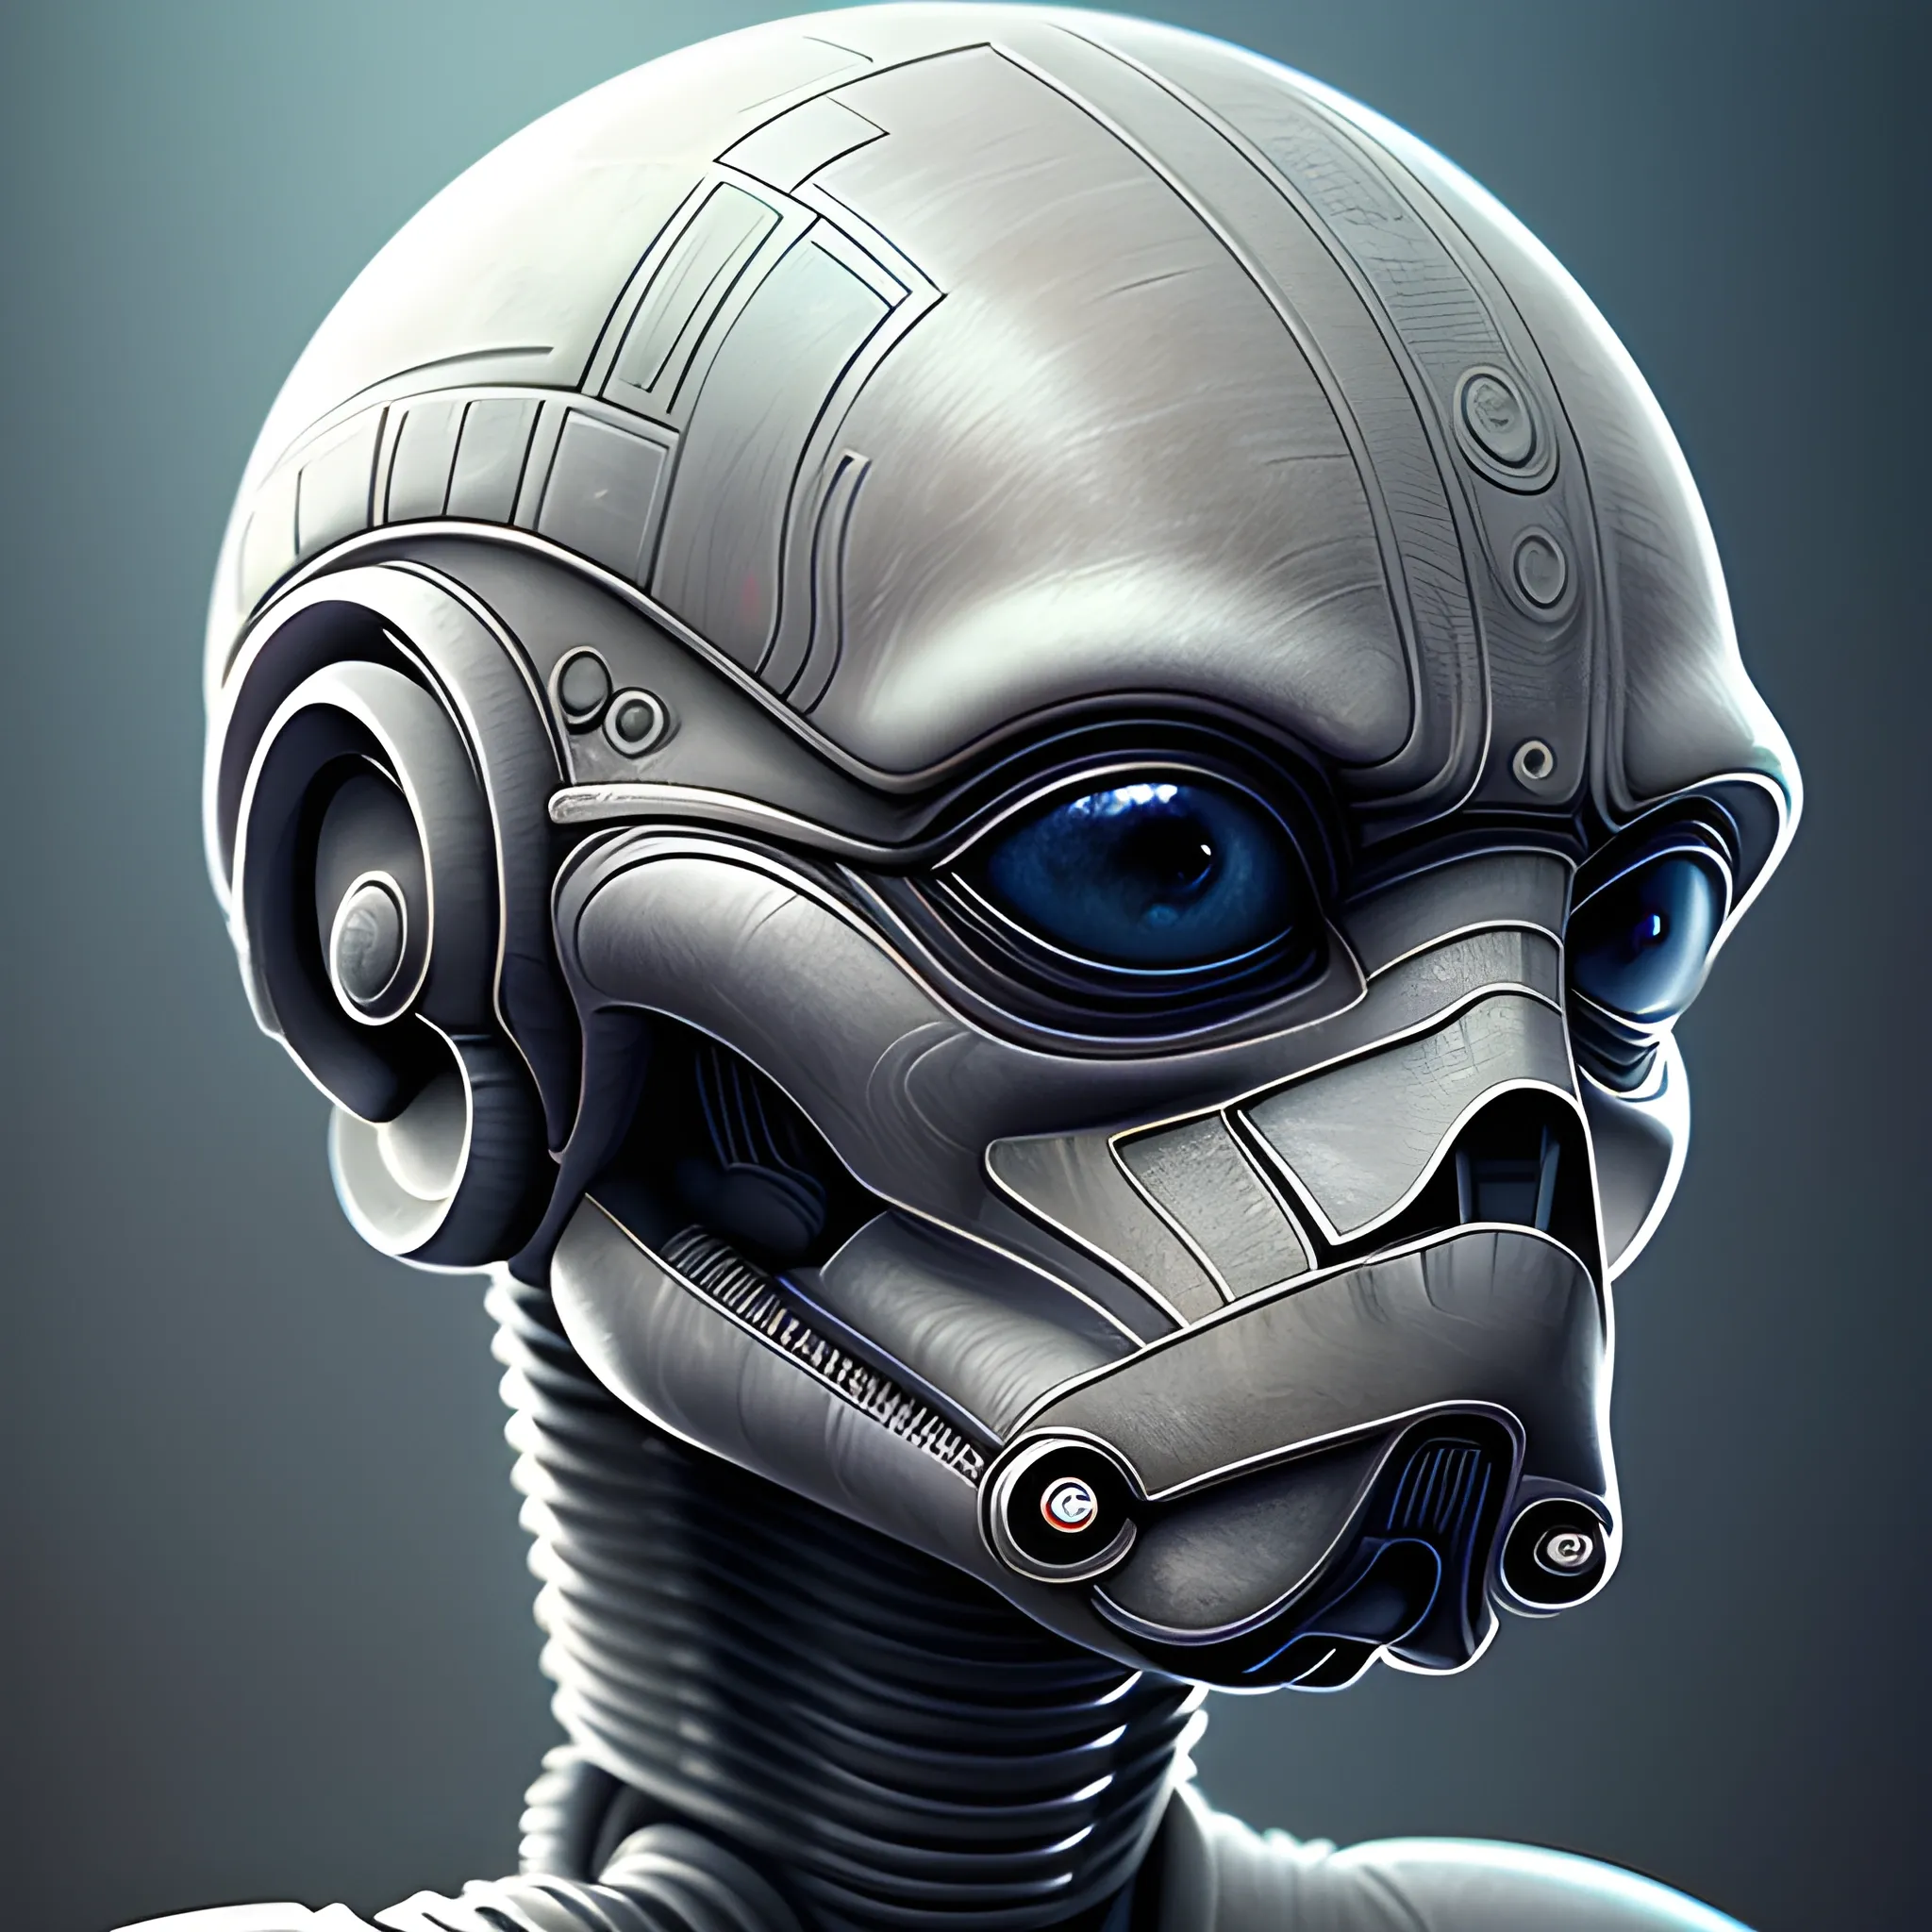 Which Star Wars AI Art Do You Prefer?